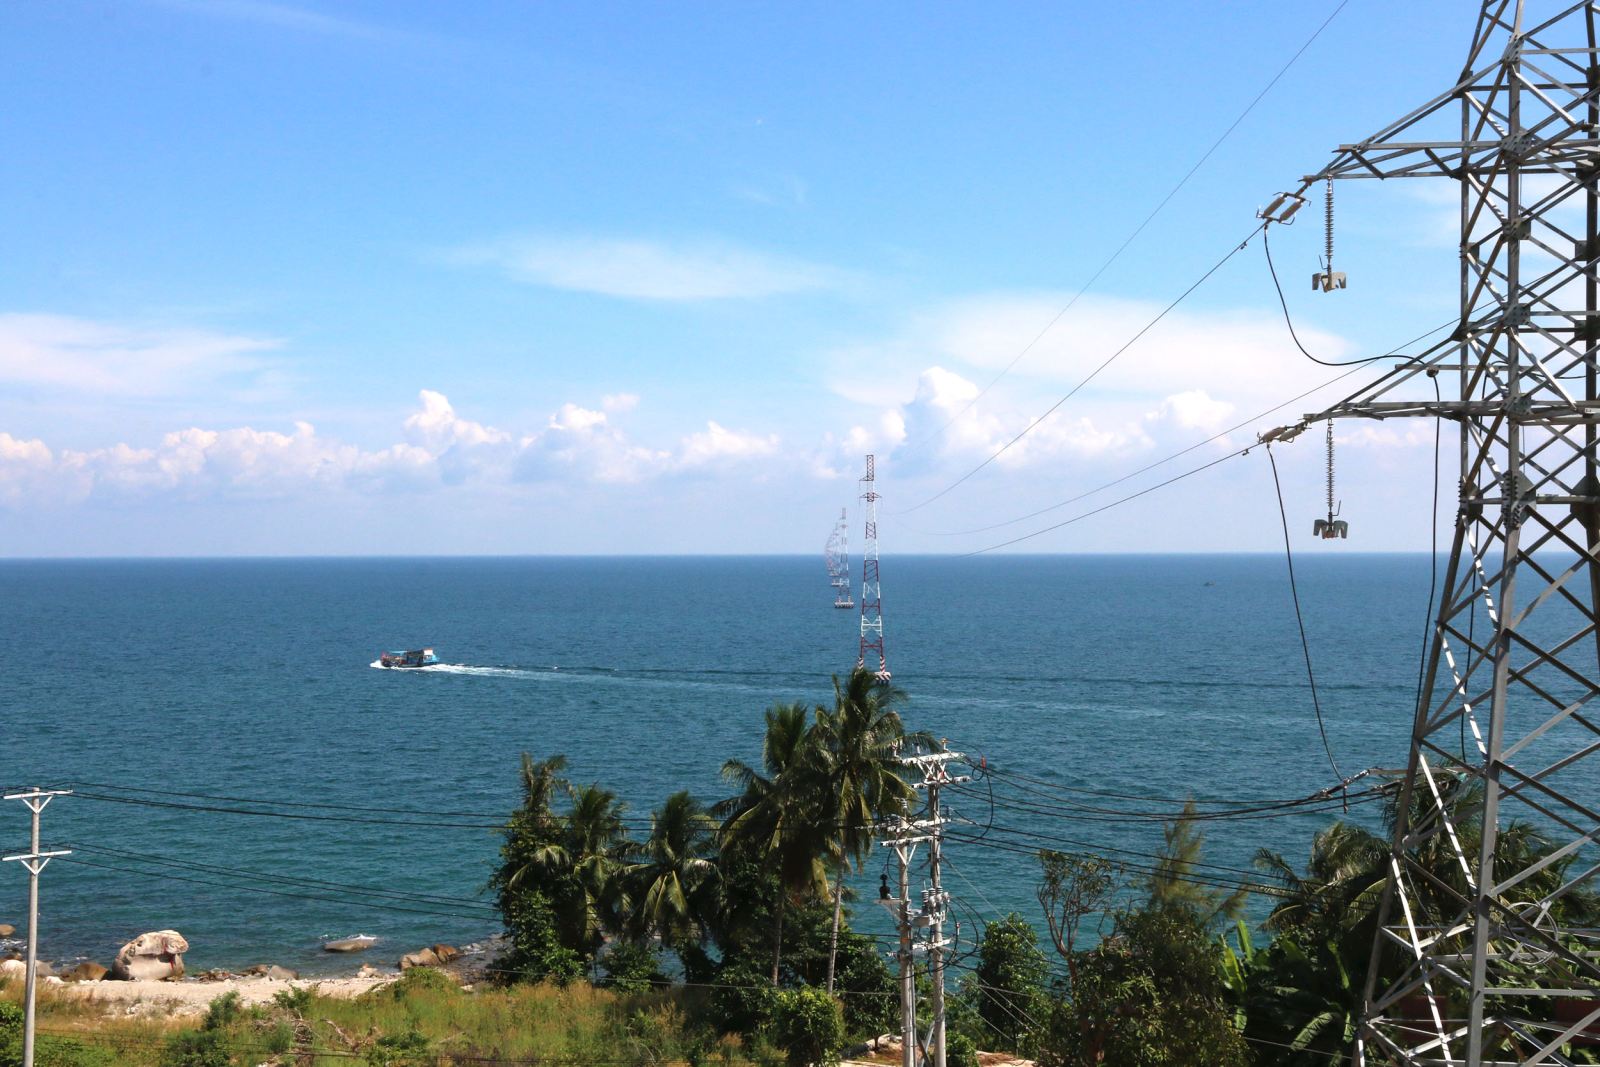 Cross-ocean power line lights up island commune